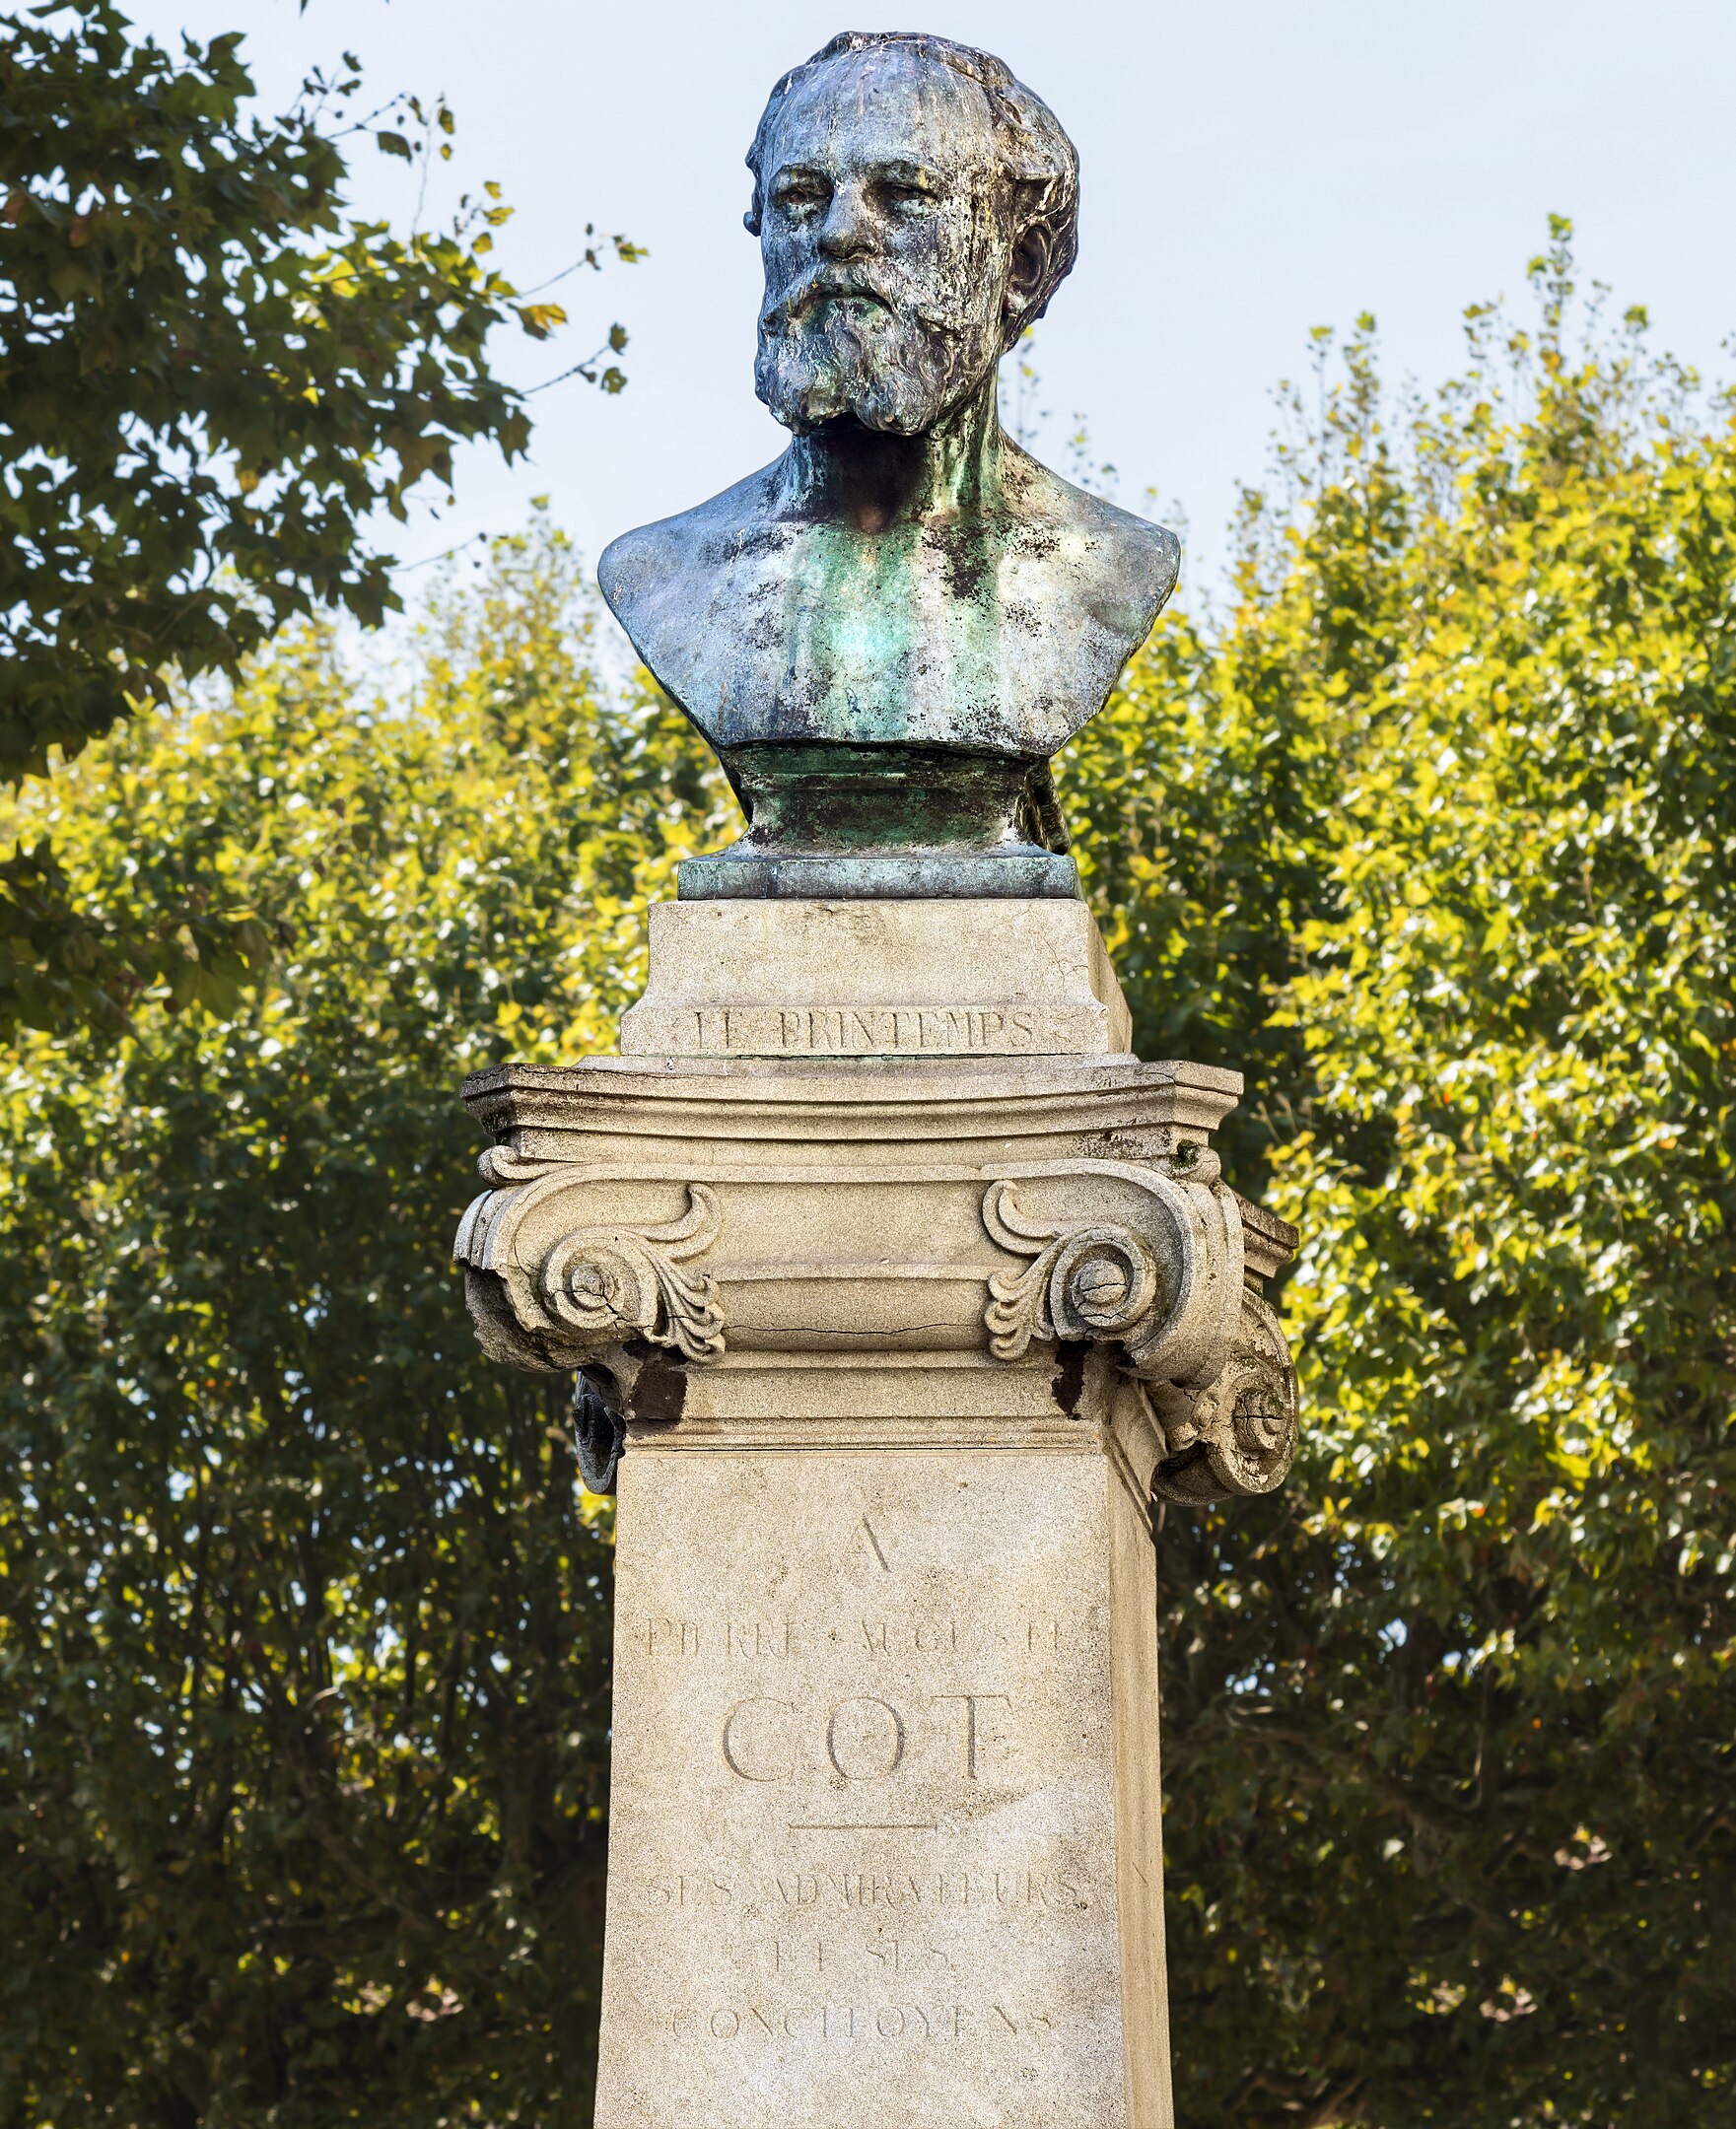 Pierre Auguste Cot - 17 Şubat 1837 - 2 Ağustos 1883